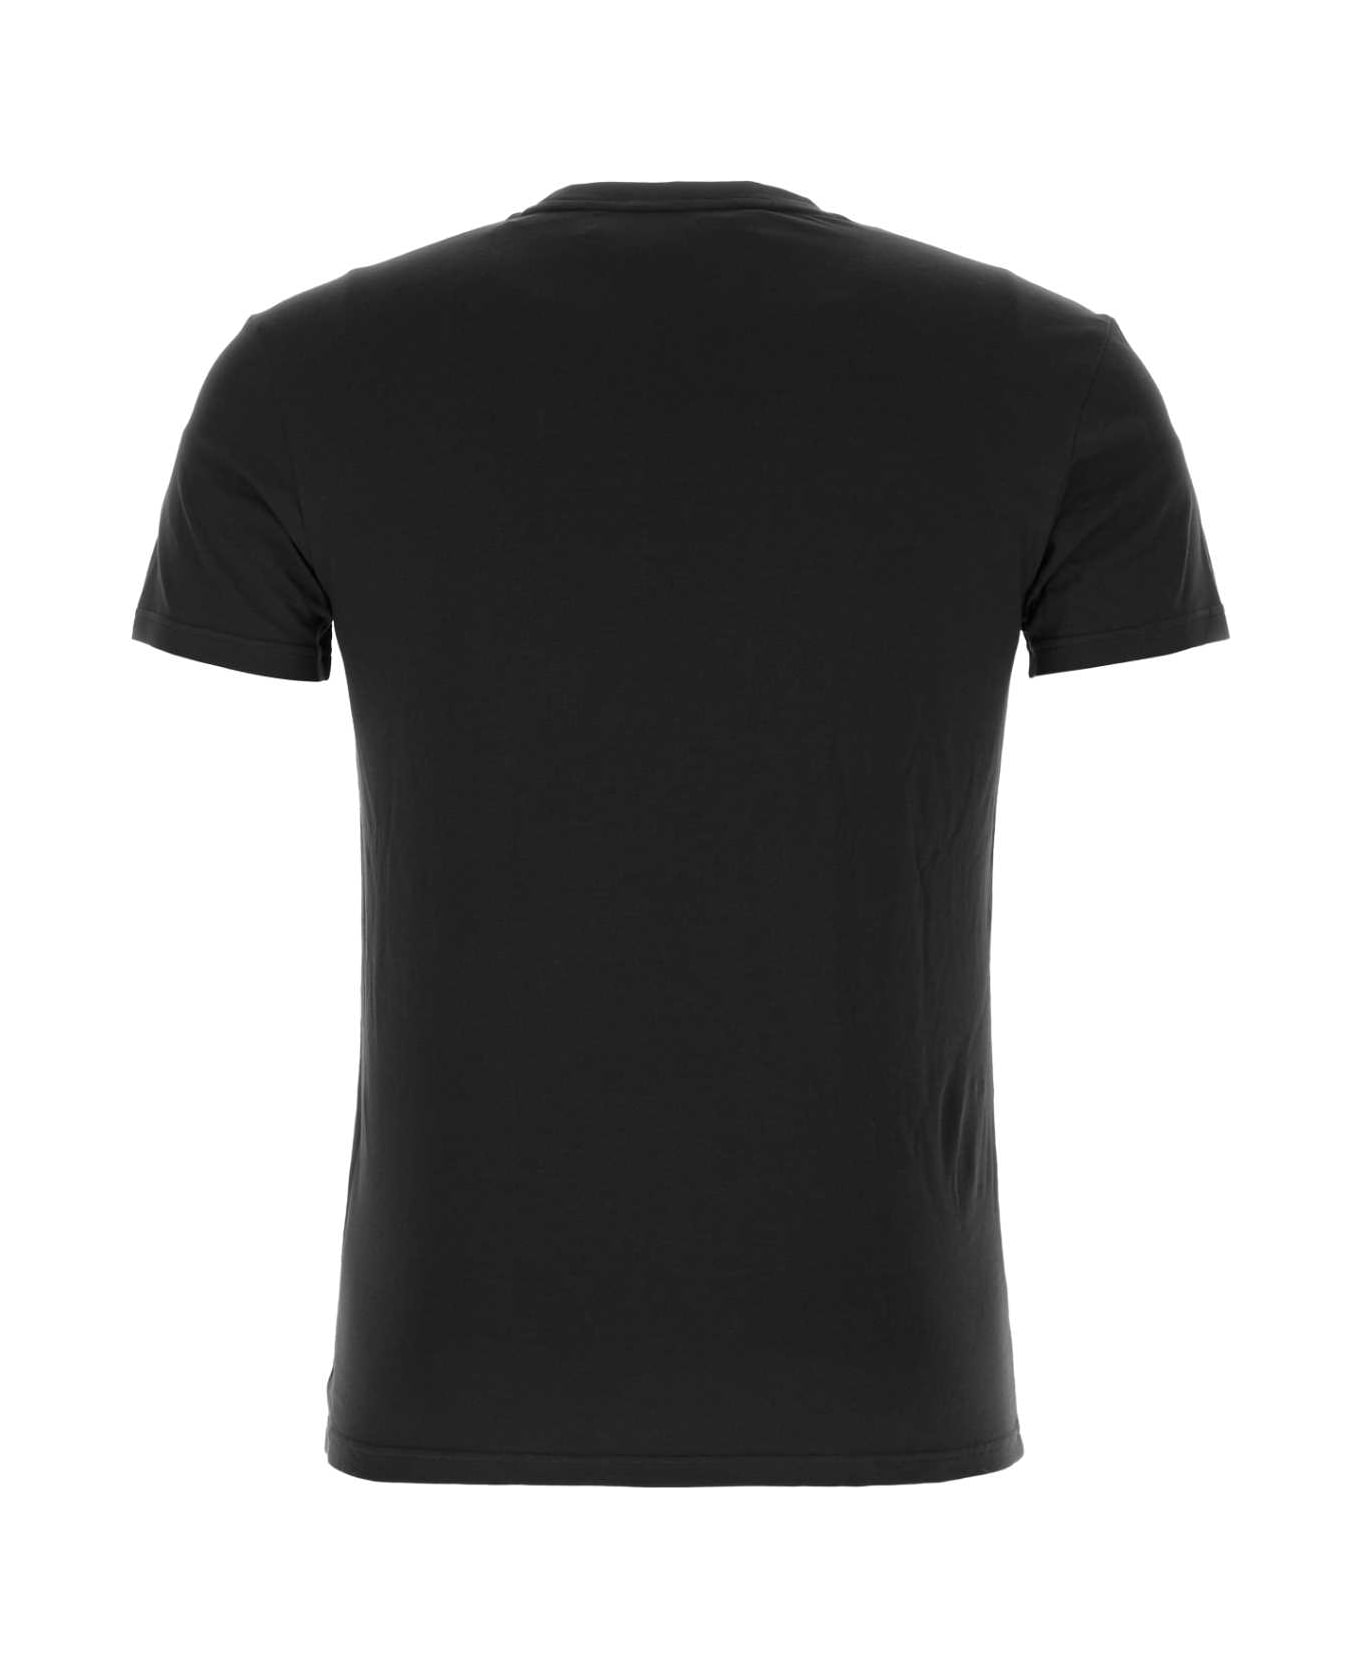 Emporio Armani Black Stretch Cotton T-shirt - 00020